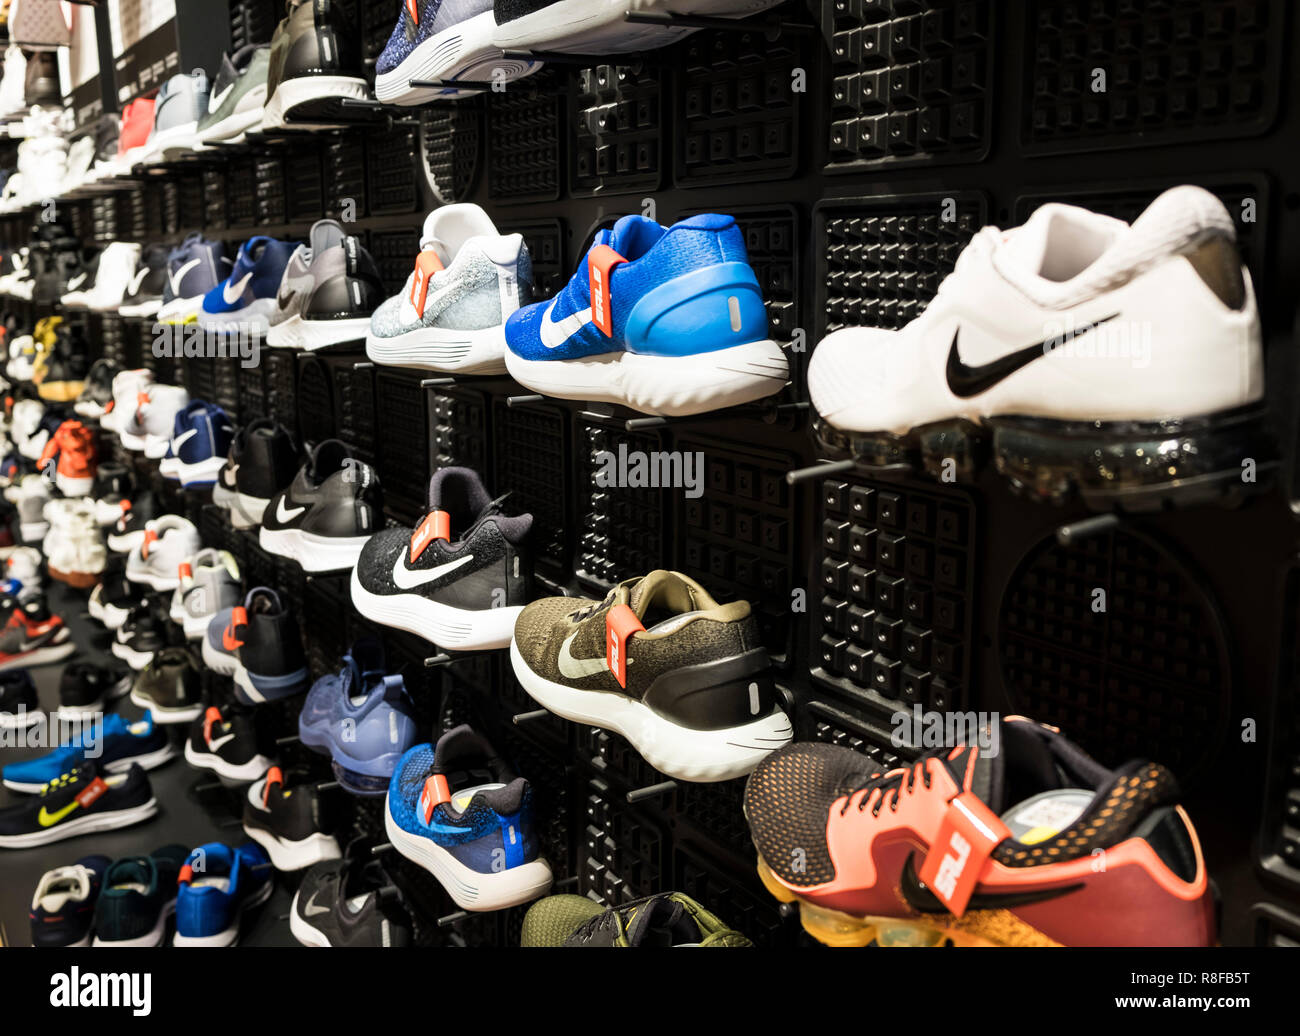 Hong Kong, Aprile 7, 2019: scarpe Nike in negozio Foto stock - Alamy